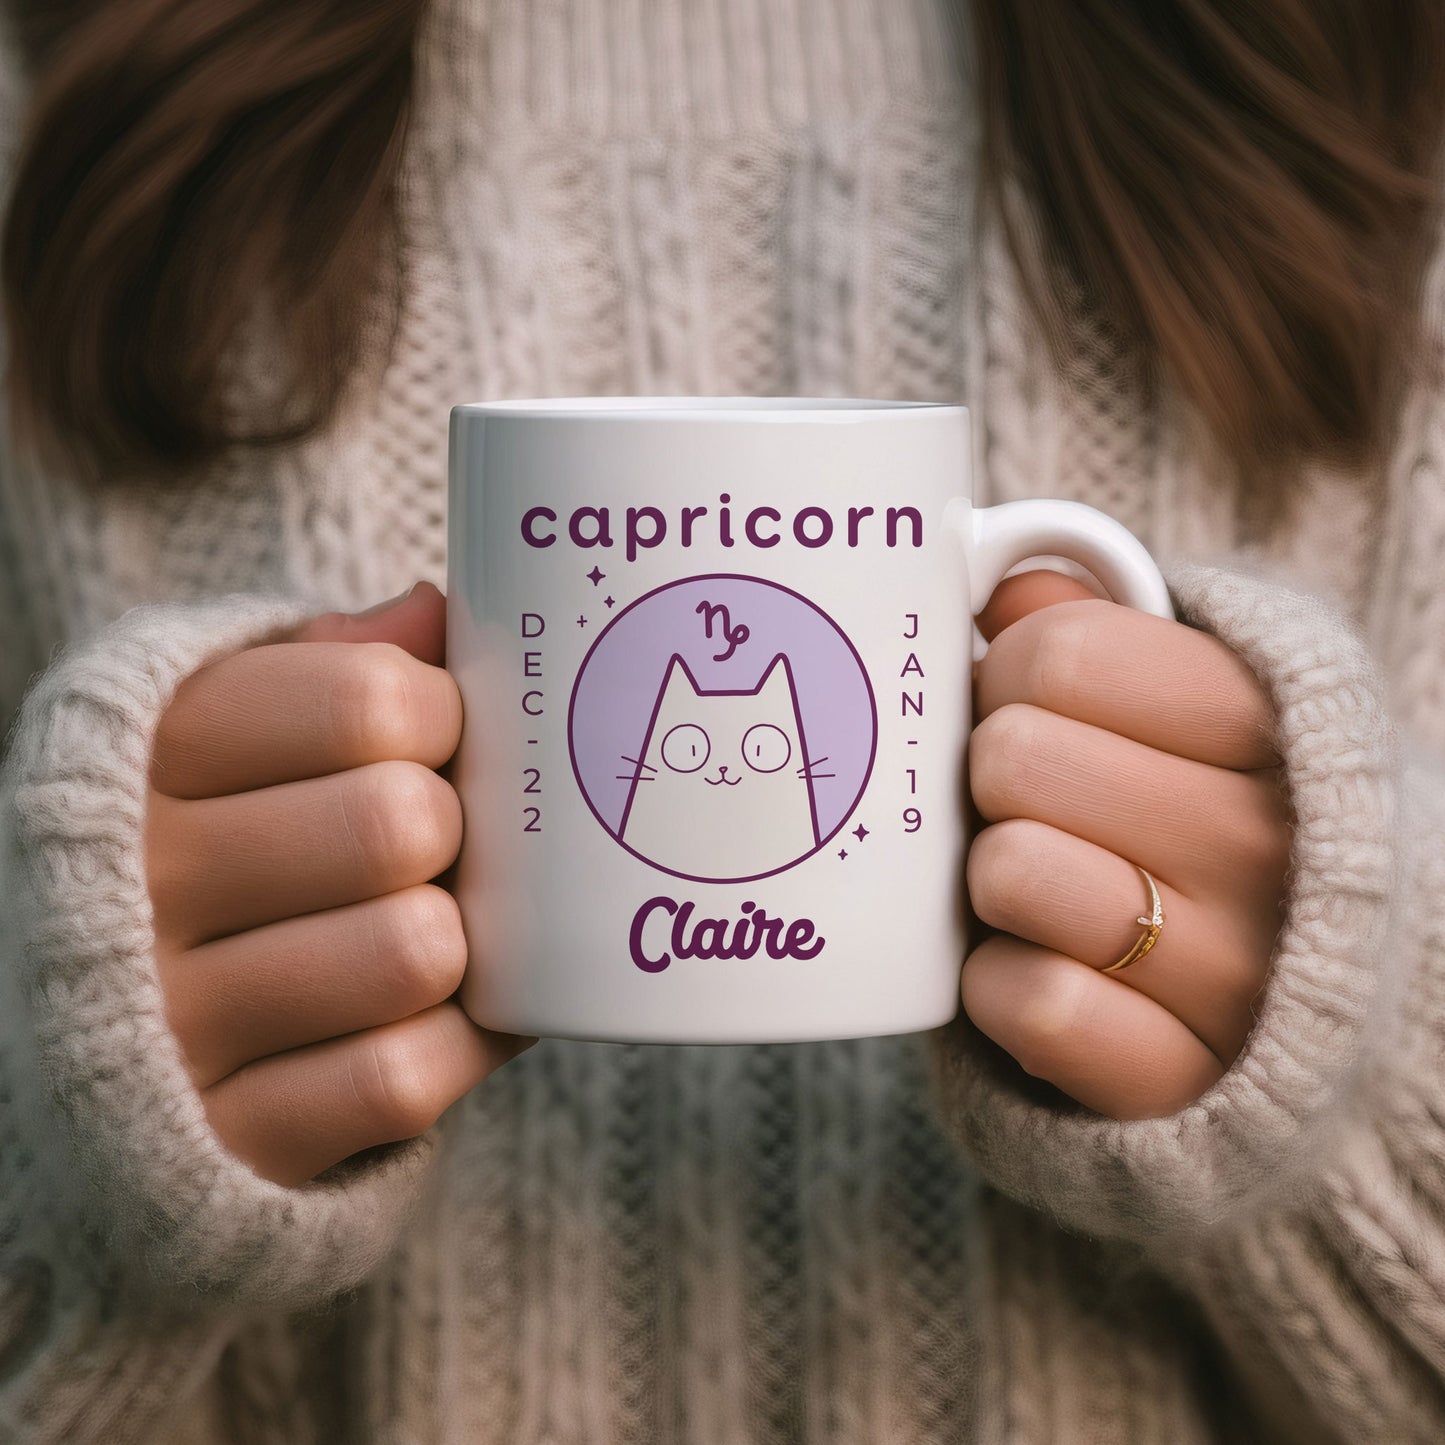 Personalised Capricorn Cat Mug